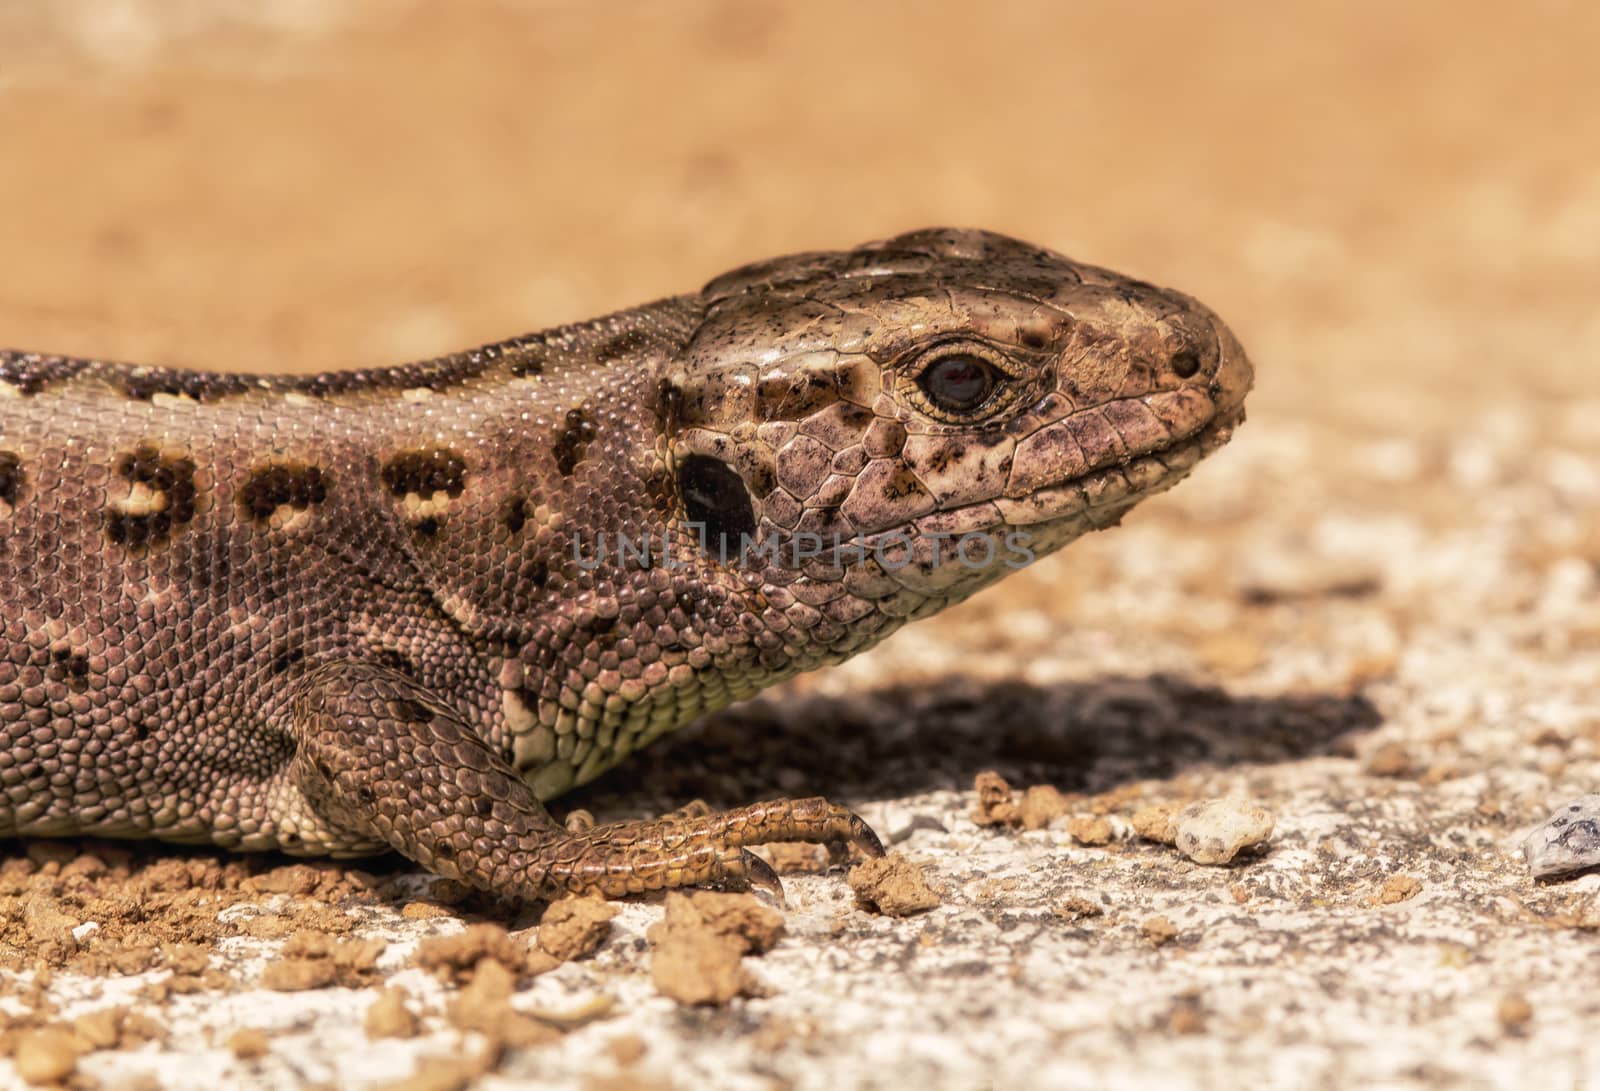 Closeup of a lizard in warm brown colors